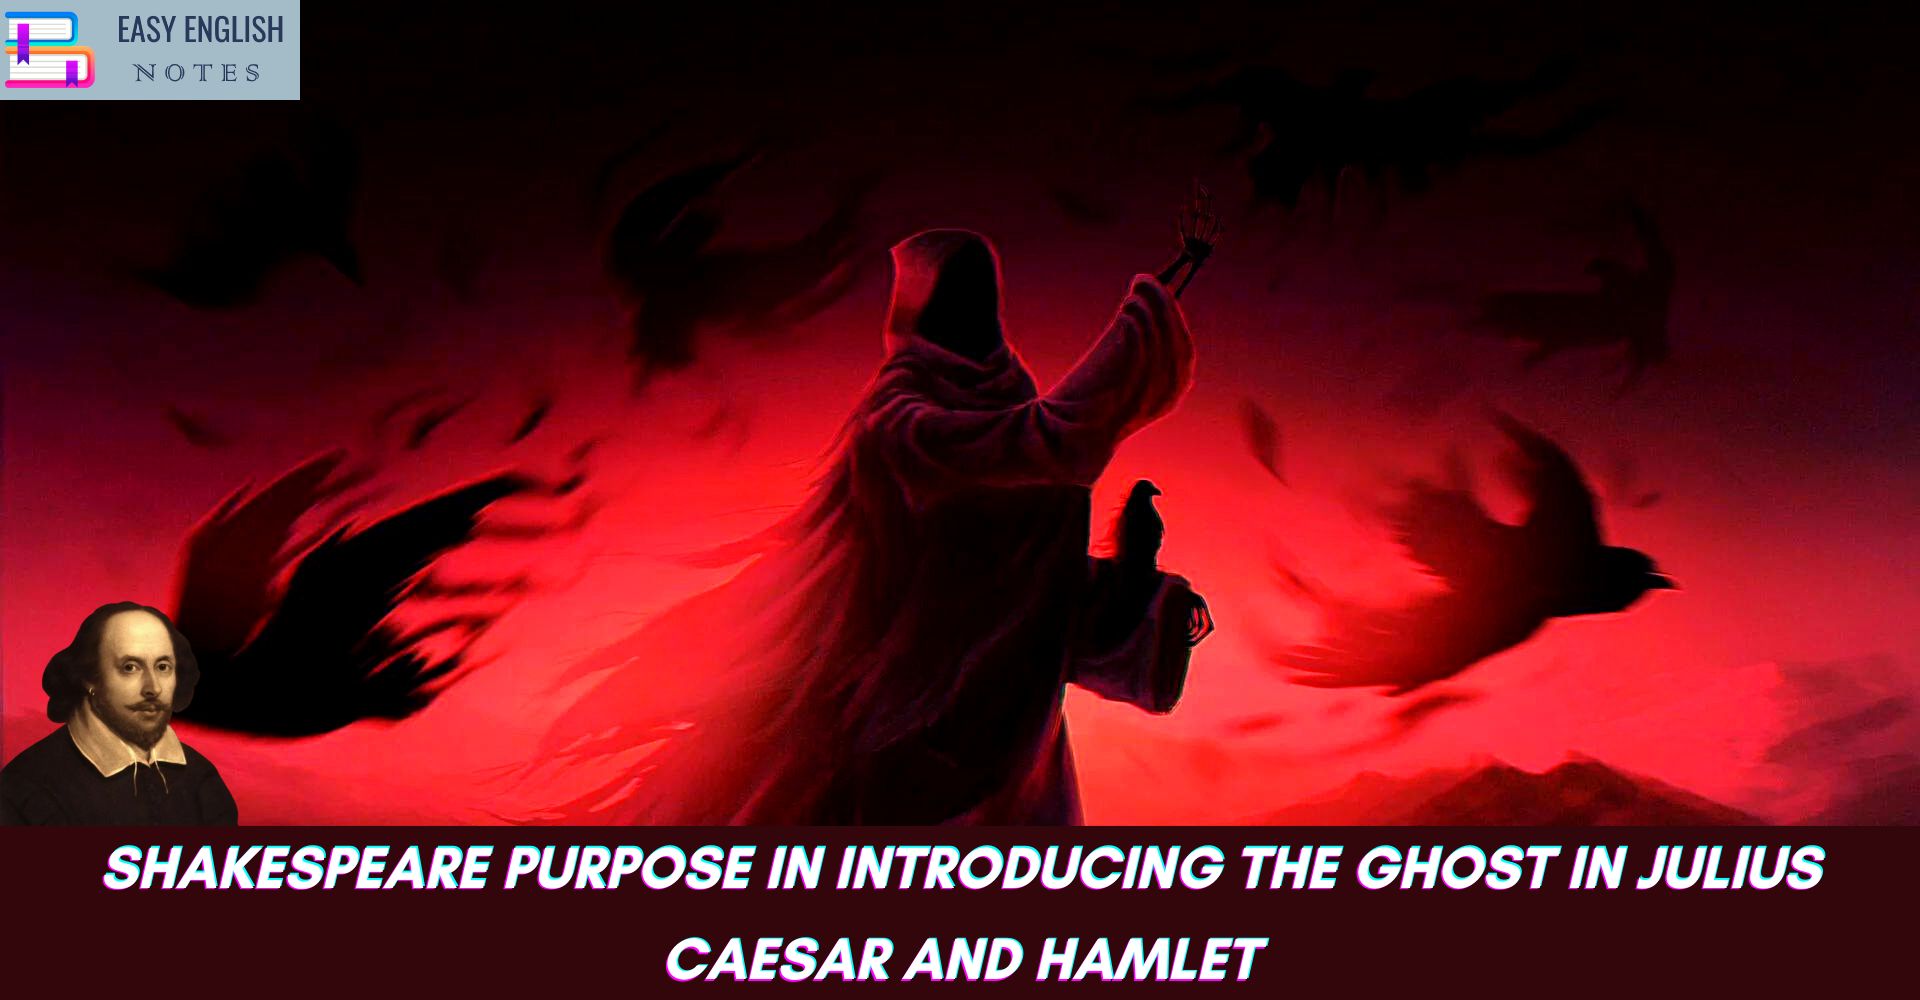 Shakespeare purpose in introducing the ghost in Julius Caesar and Hamlet